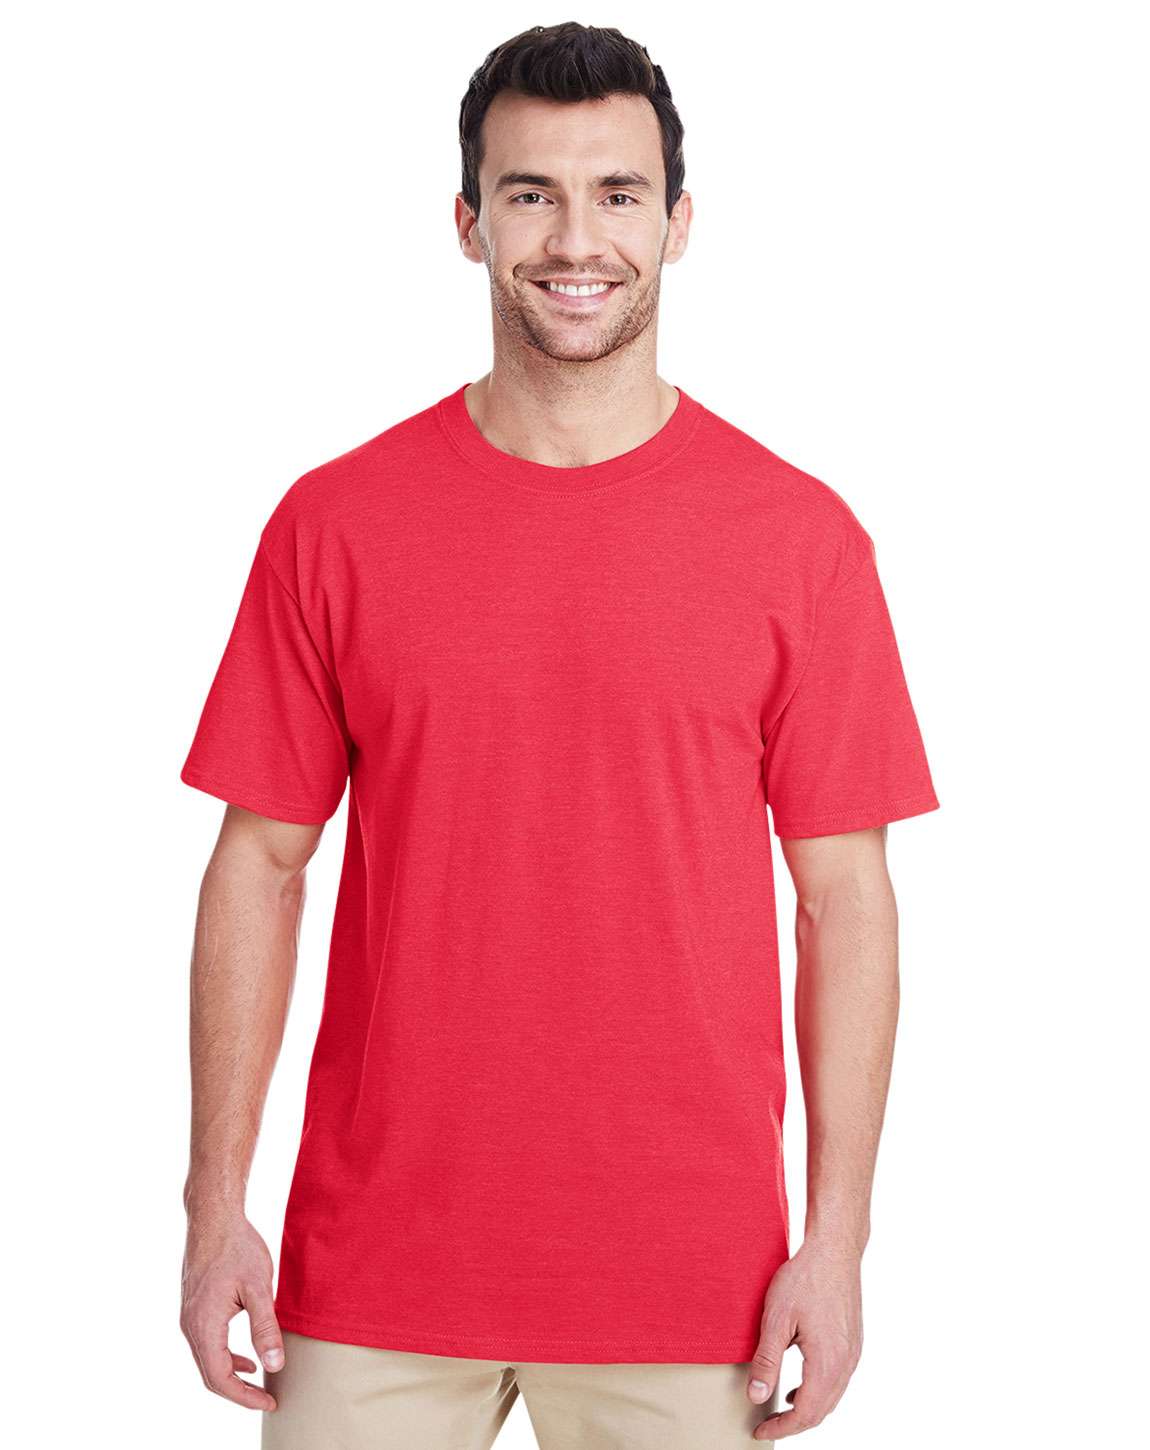 Jerzees 460R Adult Premium Ringspun T-Shirt